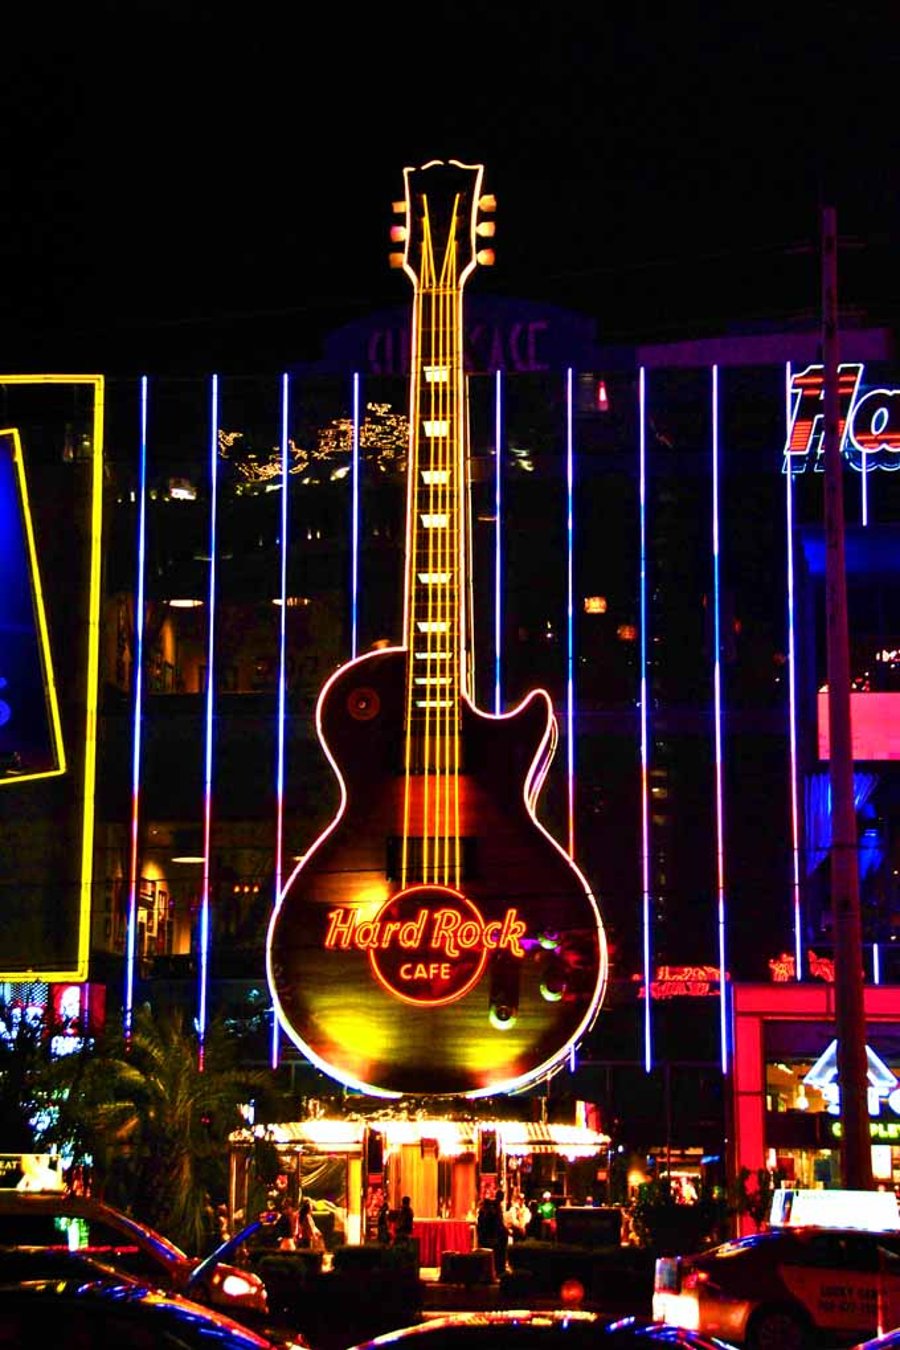 Hard Rock Cafe Guitar Las Vegas United States of America 12"x18" Print